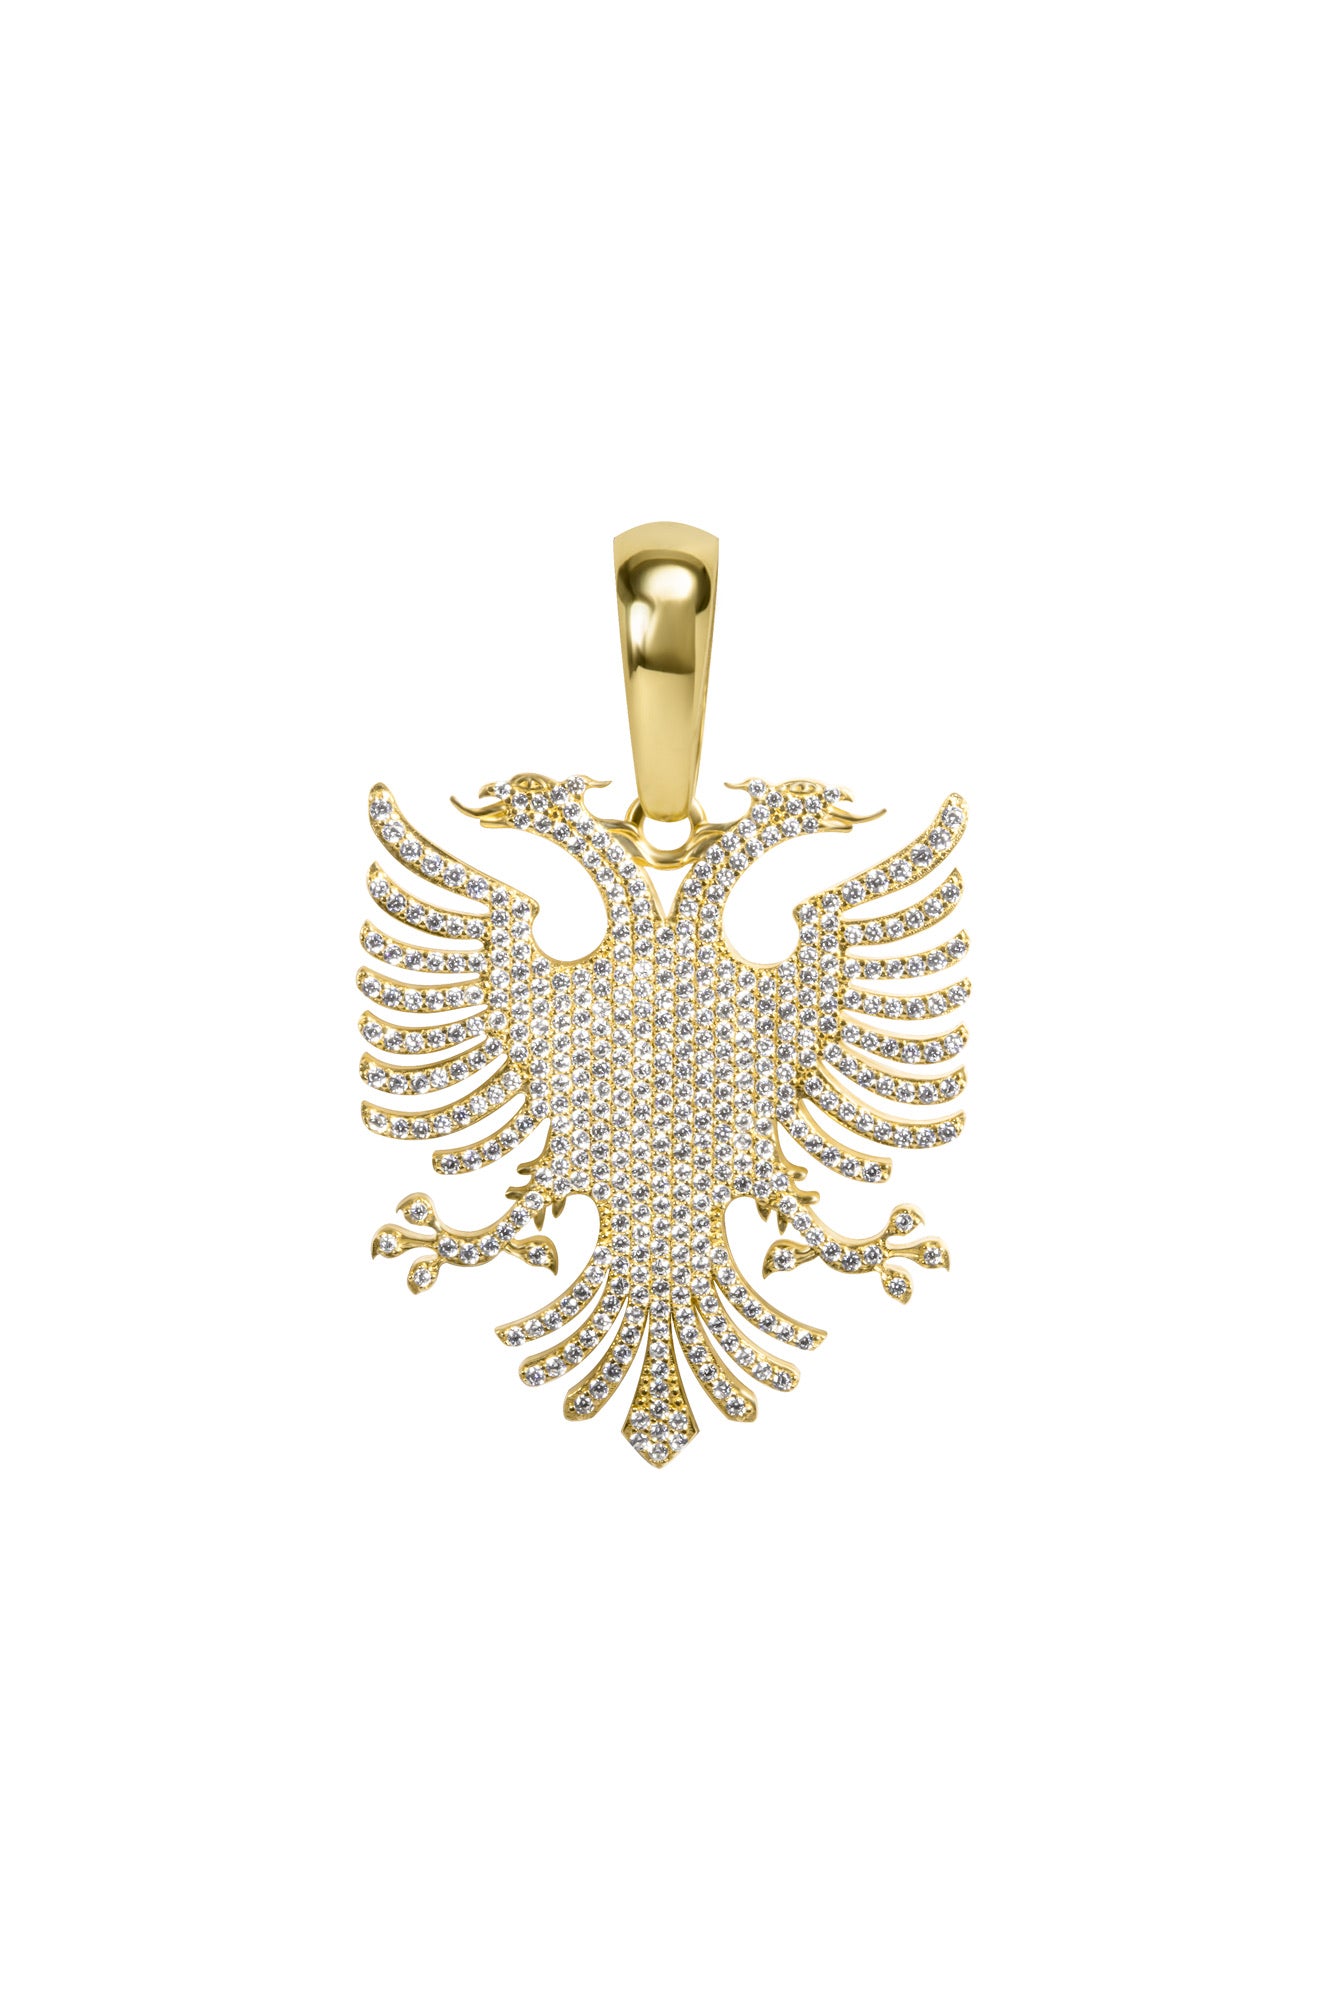 5th Republic Gold | Extra Large - Serma International